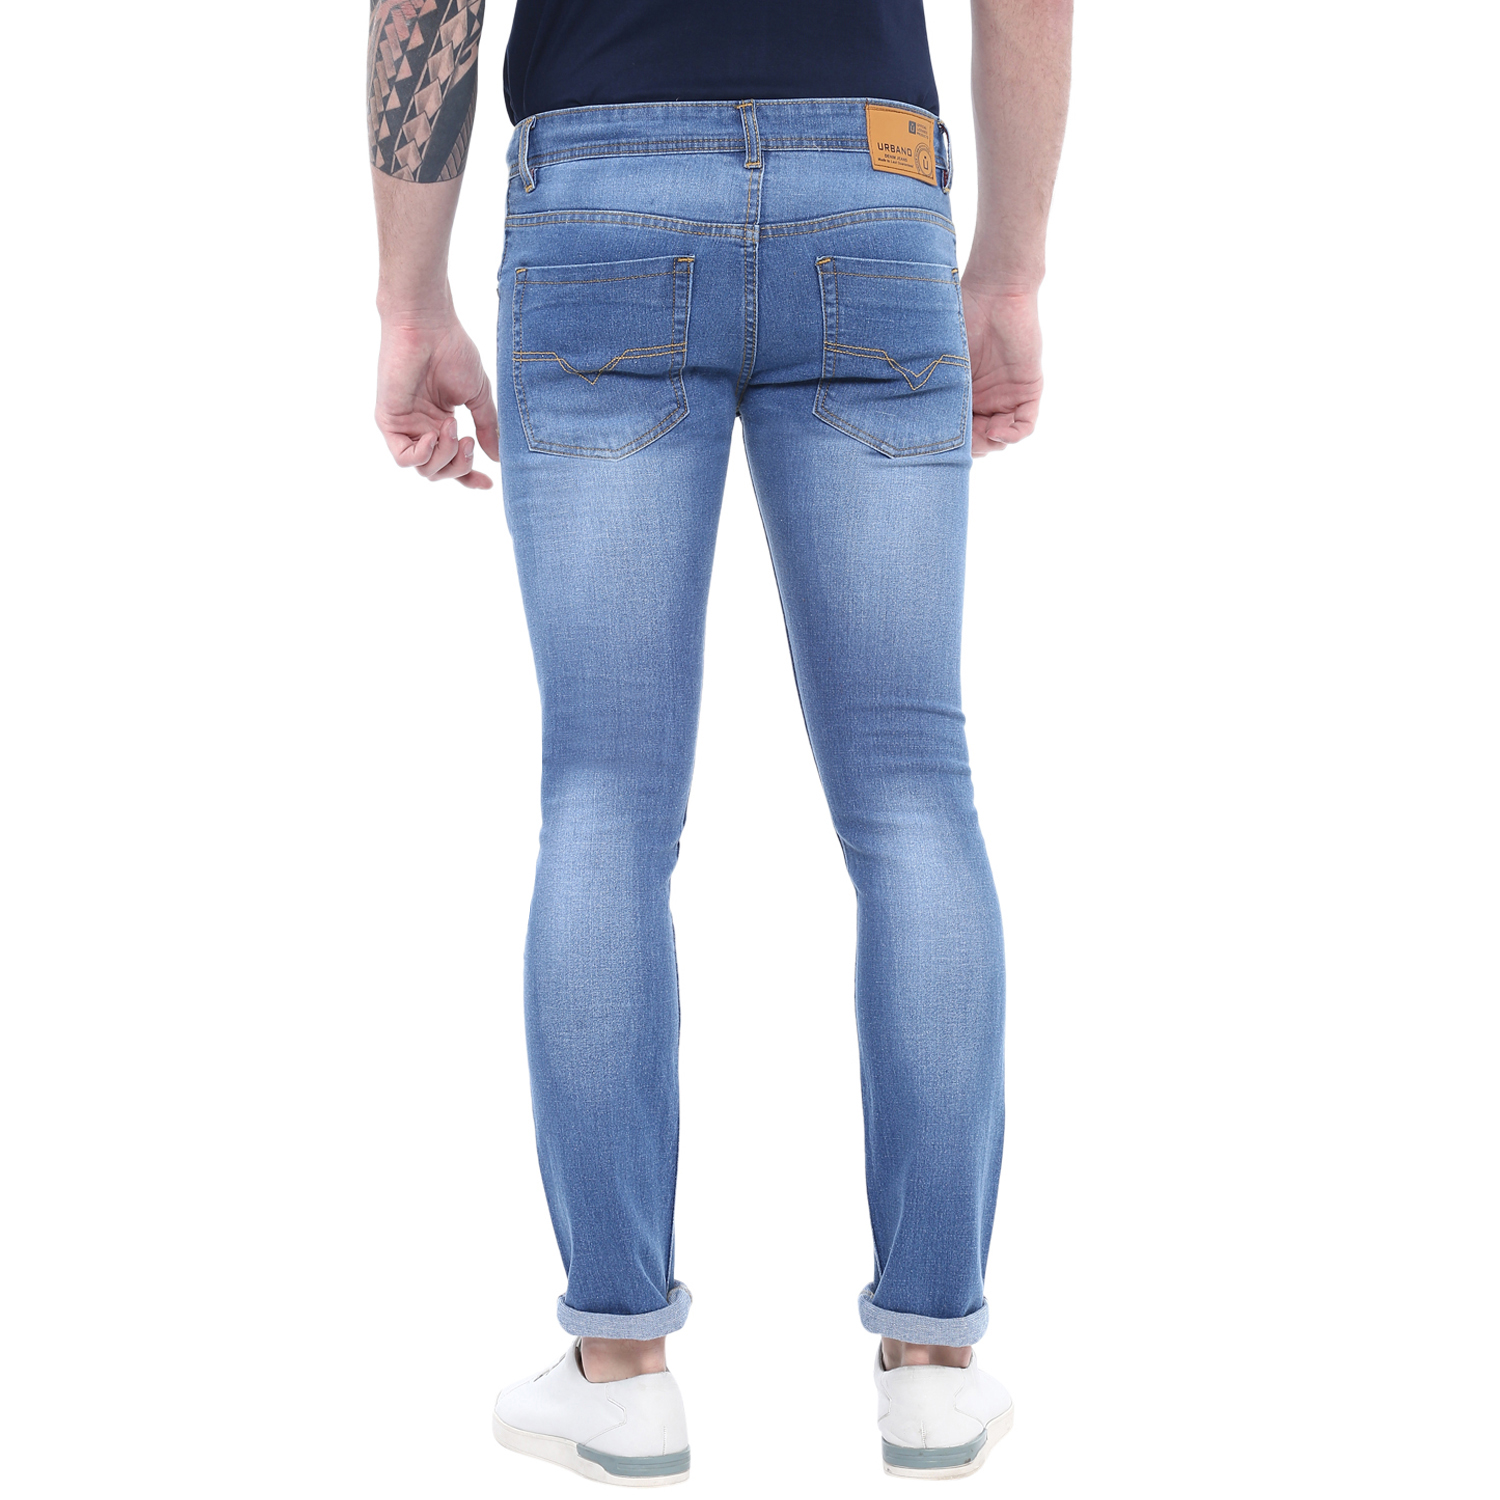 Buy Urbano Fashion Men's Stretchable Slim Fit Blue Jeans Online @ ₹859 ...